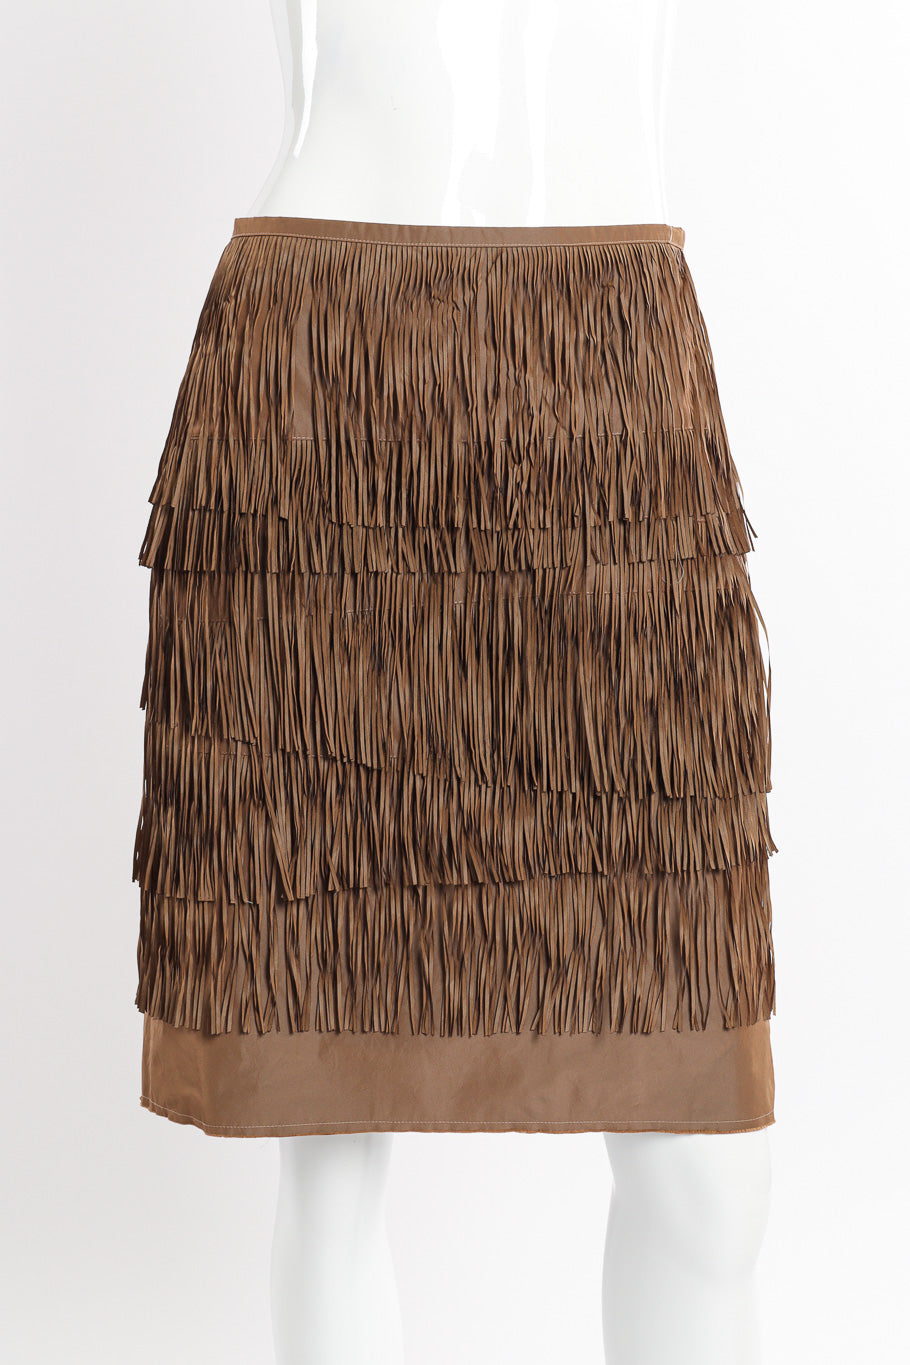 Vintage Lanvin Tiered Fringe Skirt front view on mannequin closeup @recessla